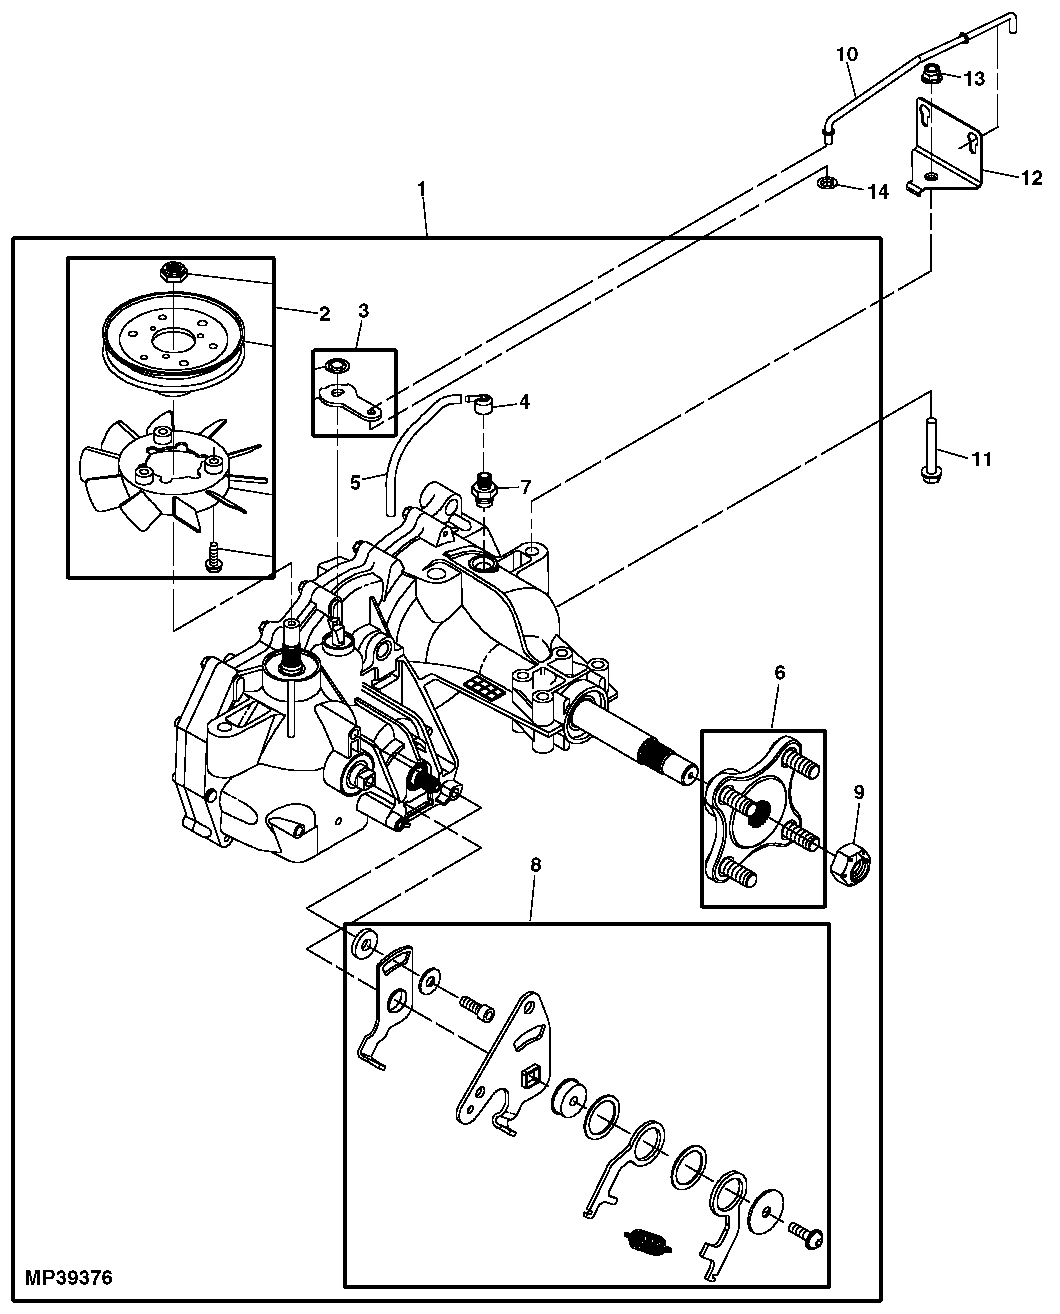 John Deere Z245 Parts Diagram